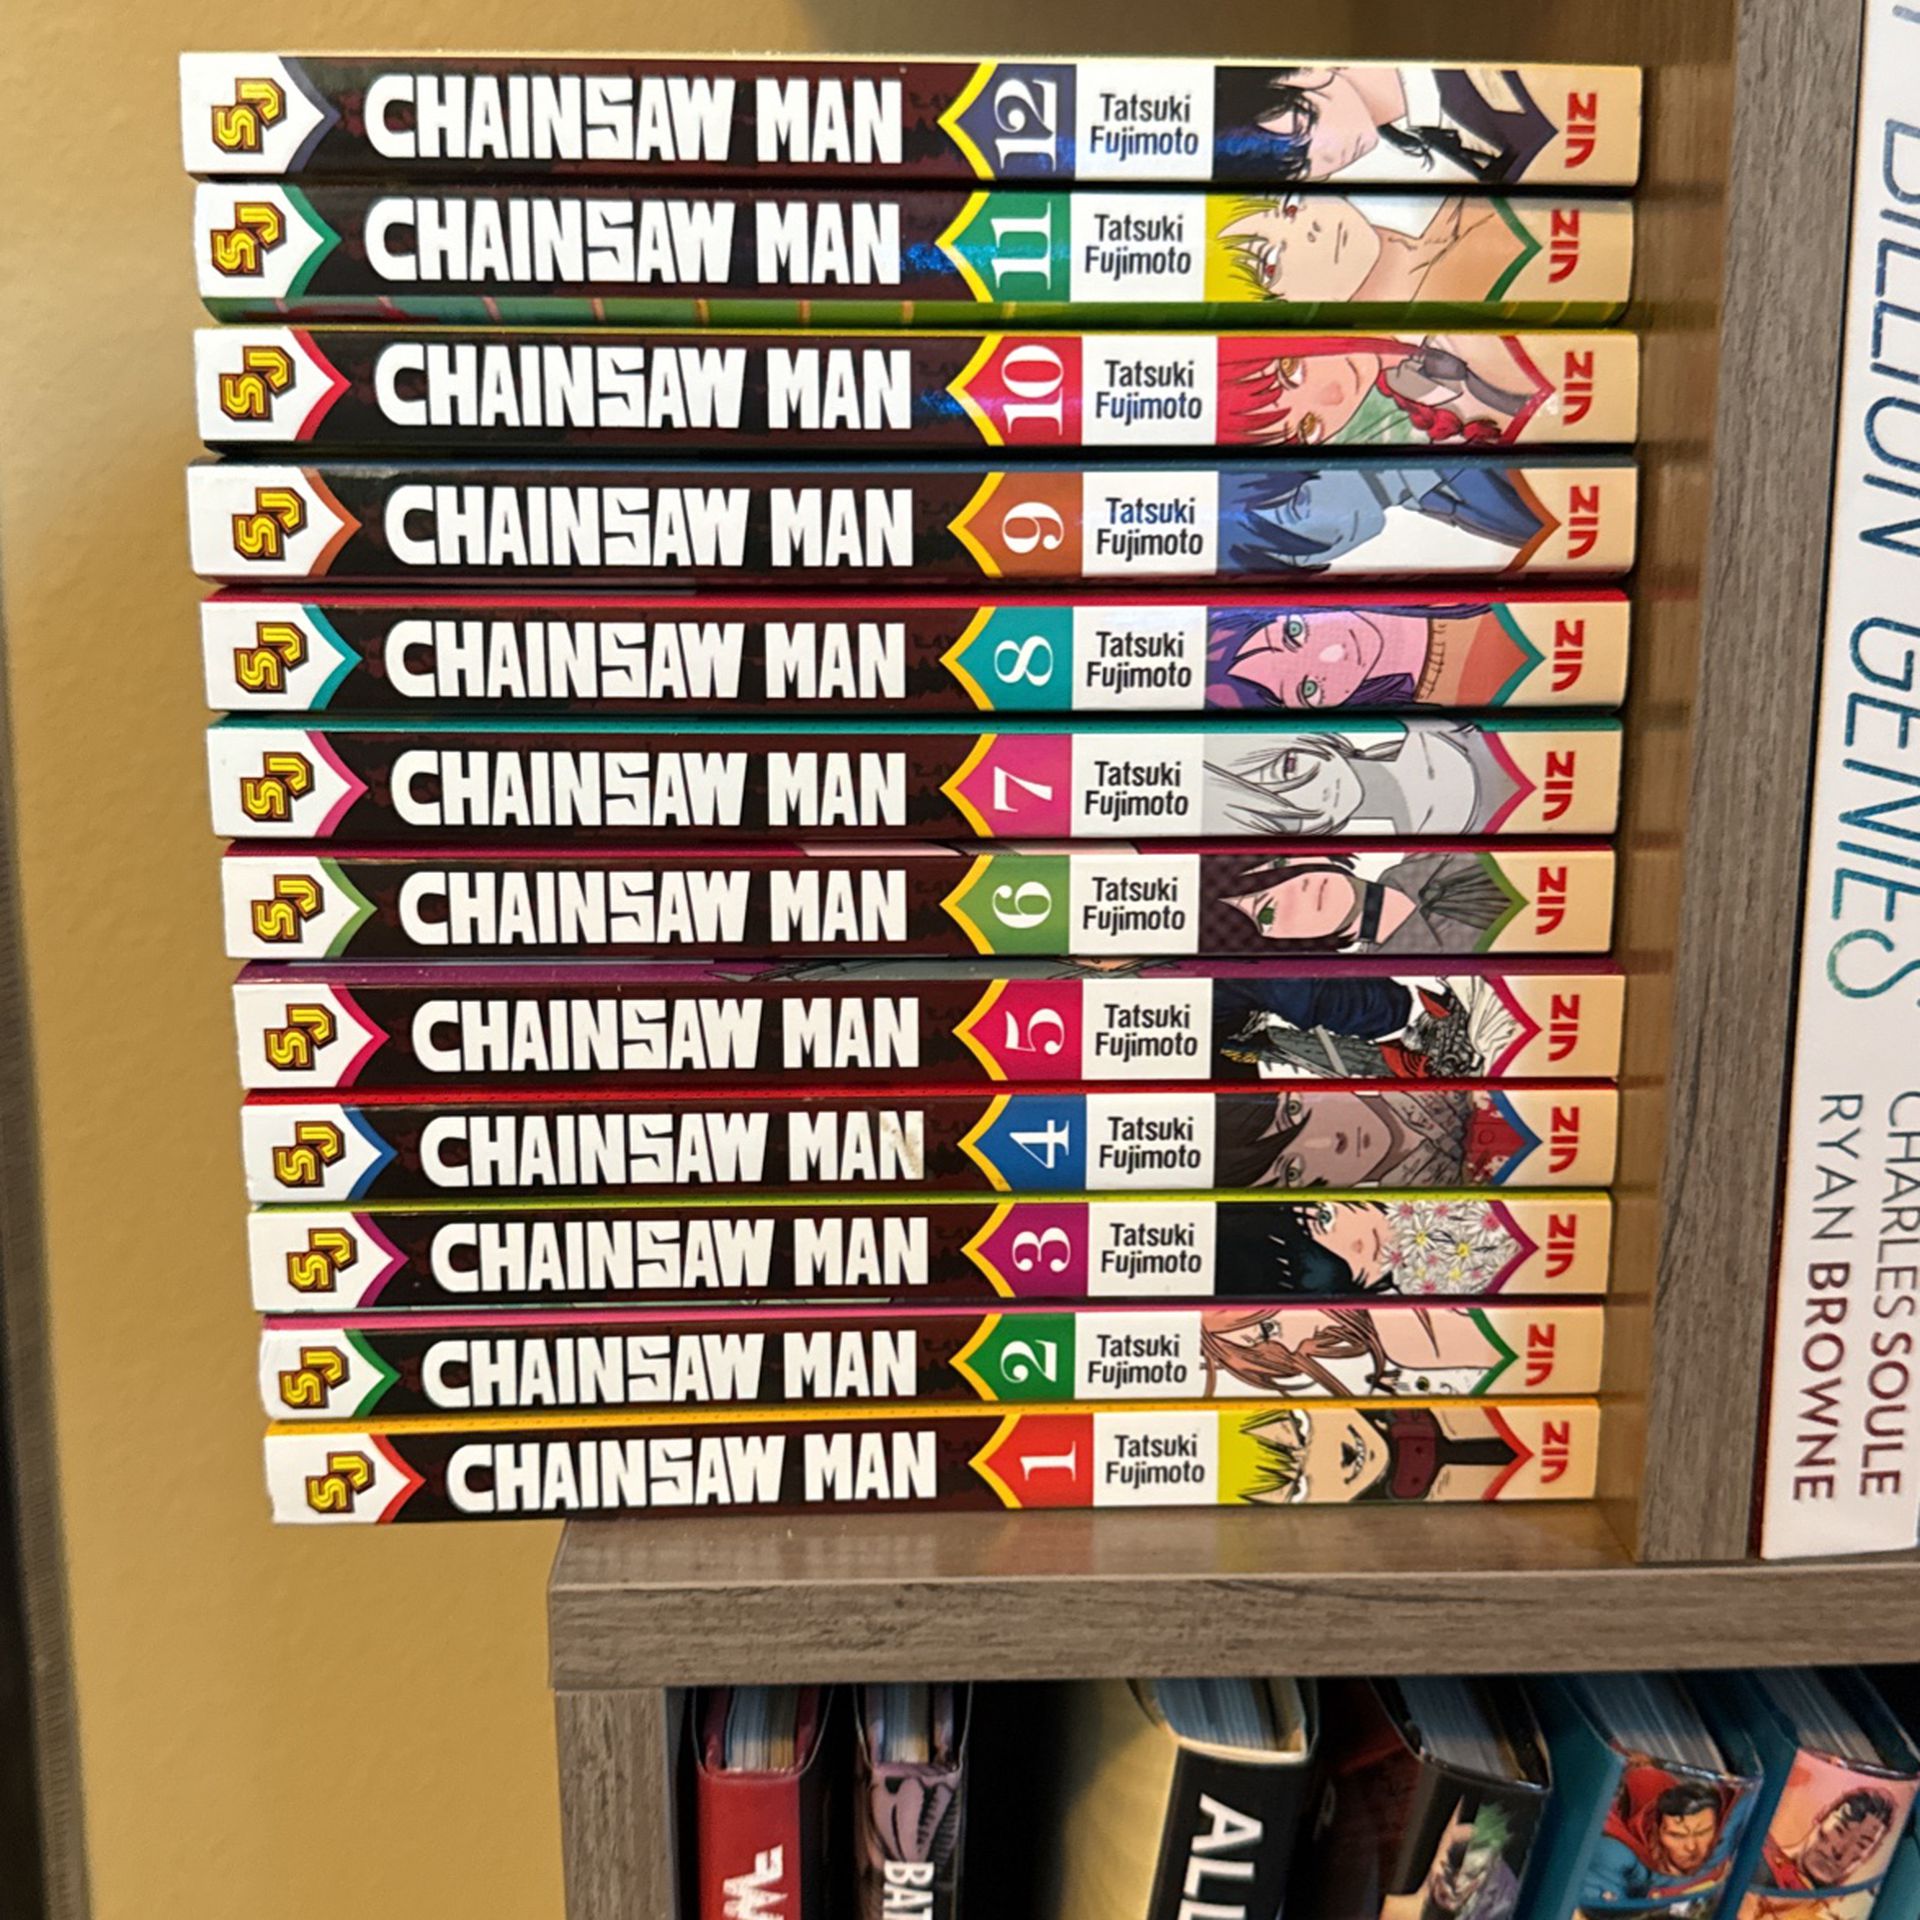 Chainsaw Man Vol. 1-12 - Like New